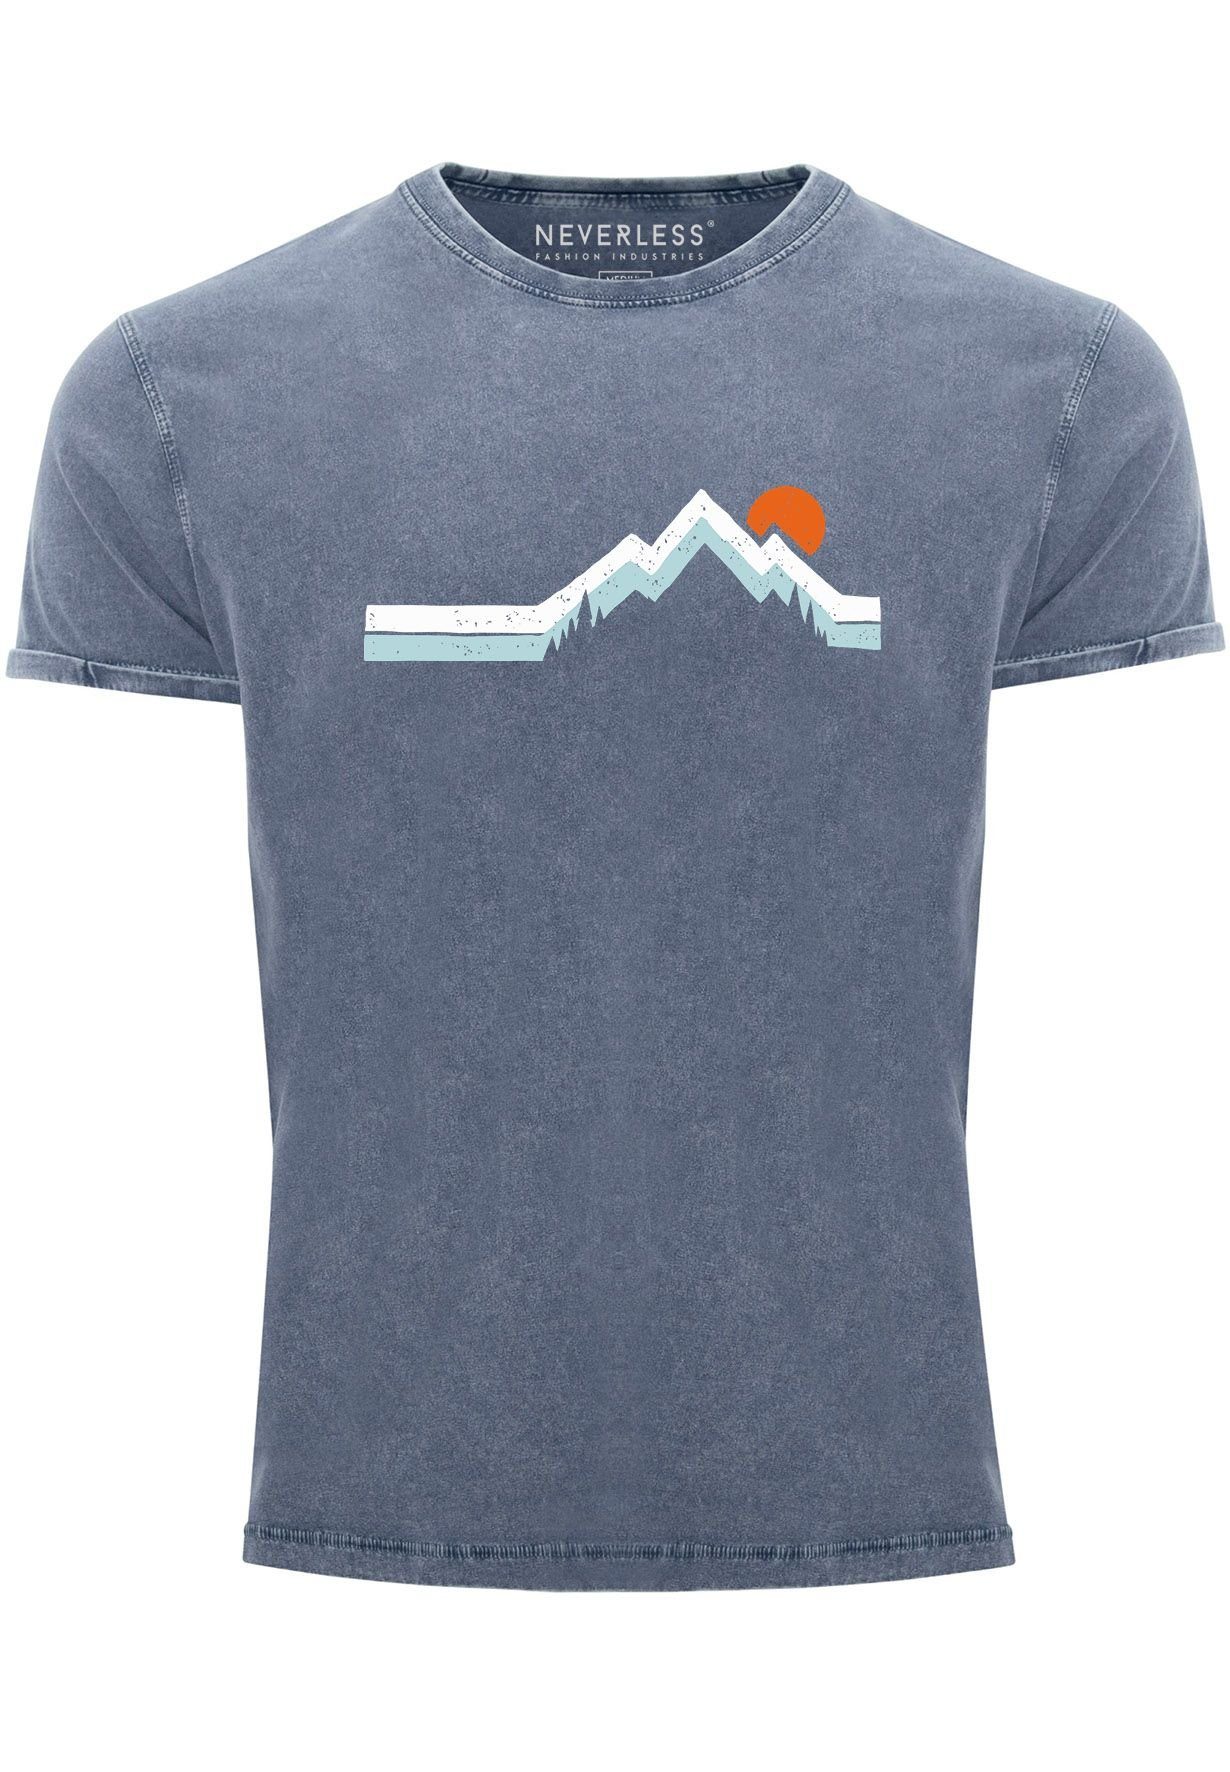 Vintage-Shirt Berg T-Shirt Printshirt mit Auf Outdoor Herren Neverless Print Natur Wandern Print-Shirt